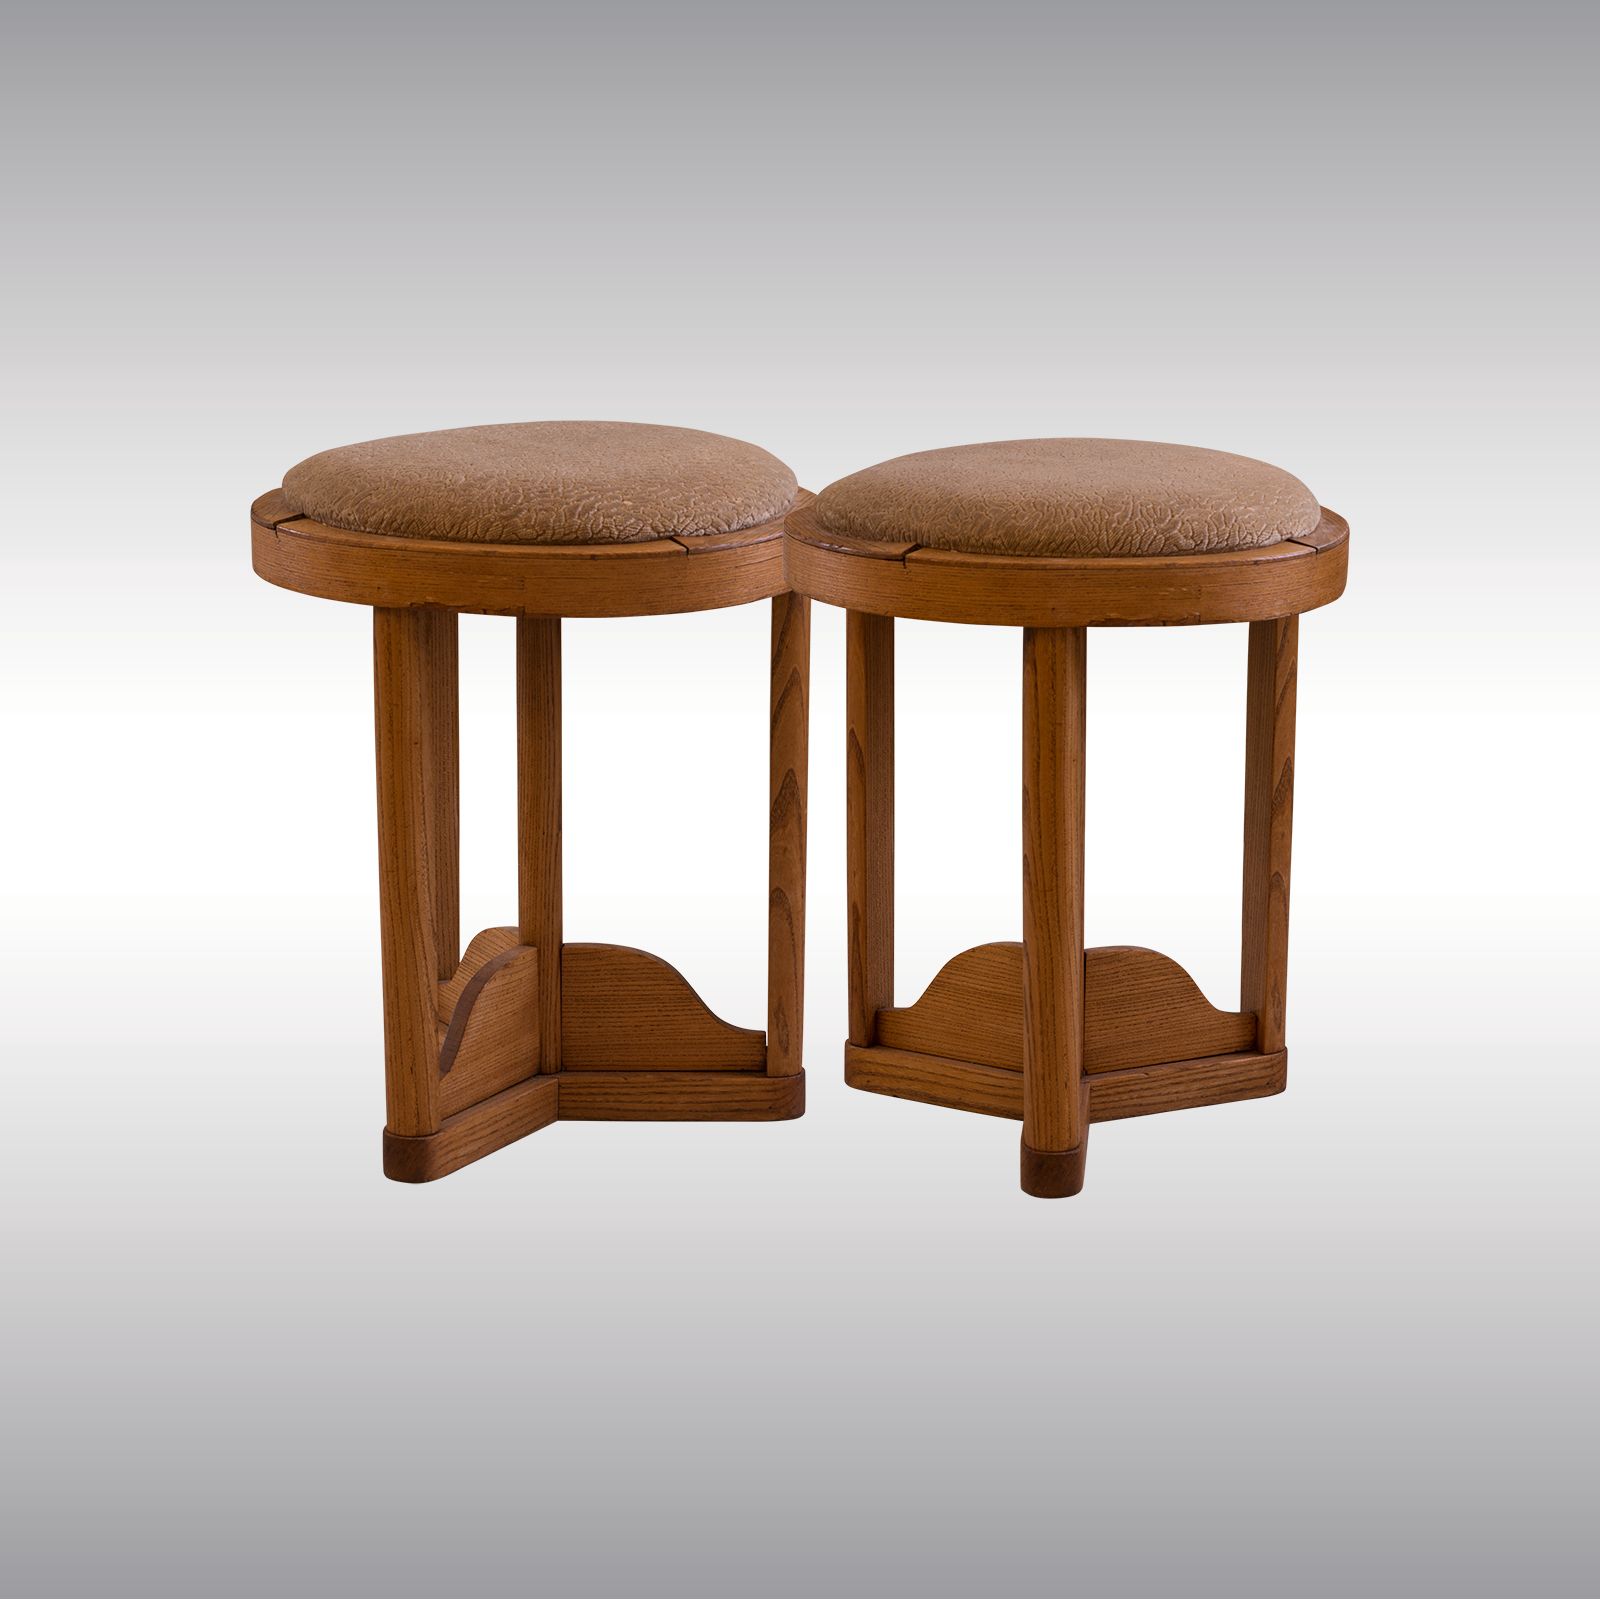 WOKA LAMPS VIENNA - OrderNr.: 80077|Pair of Josef Hoffmann attr. stools - Design: Josef Hoffmann attr.